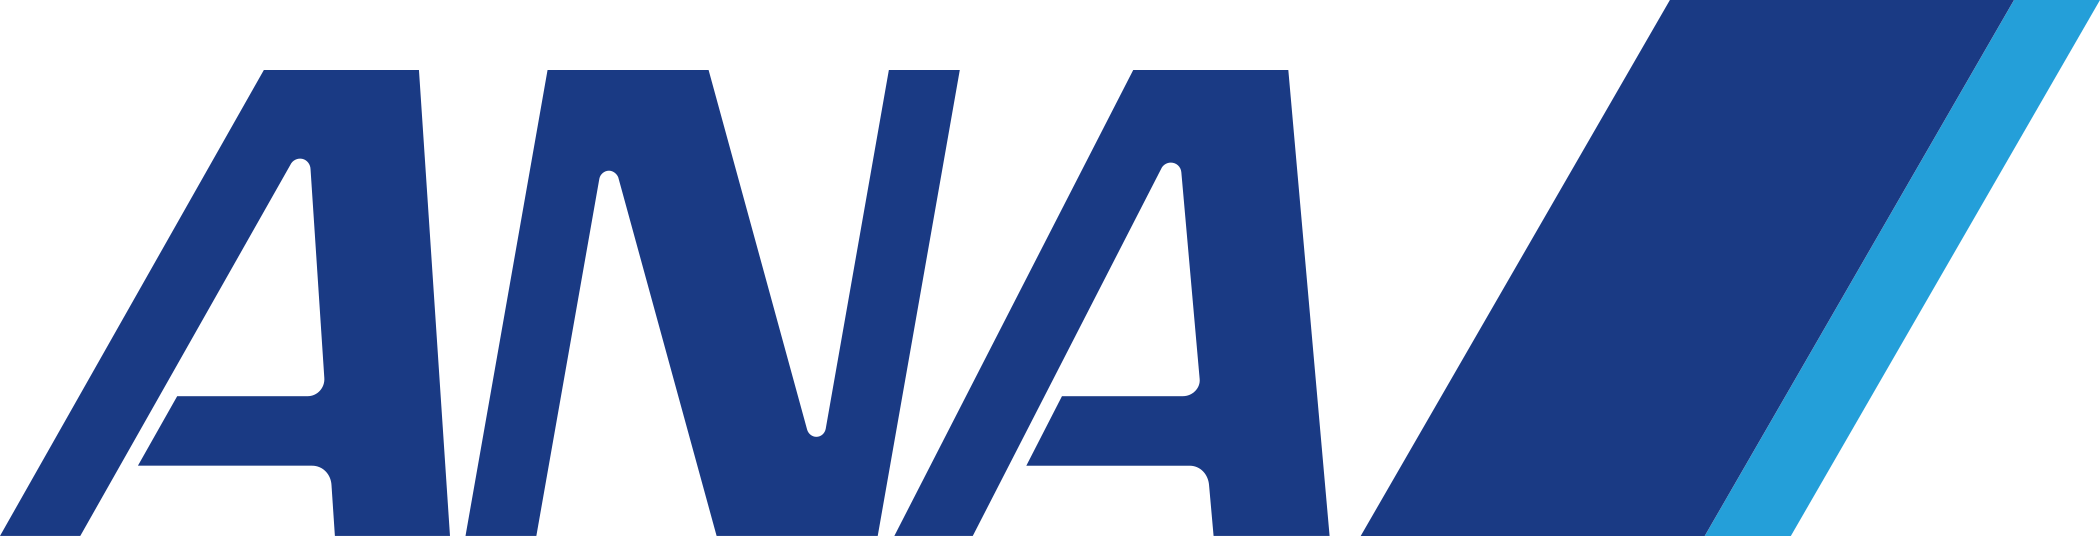 ana logo all all nippon airways 1 - Ana Logo - All Nippon Airways Logo